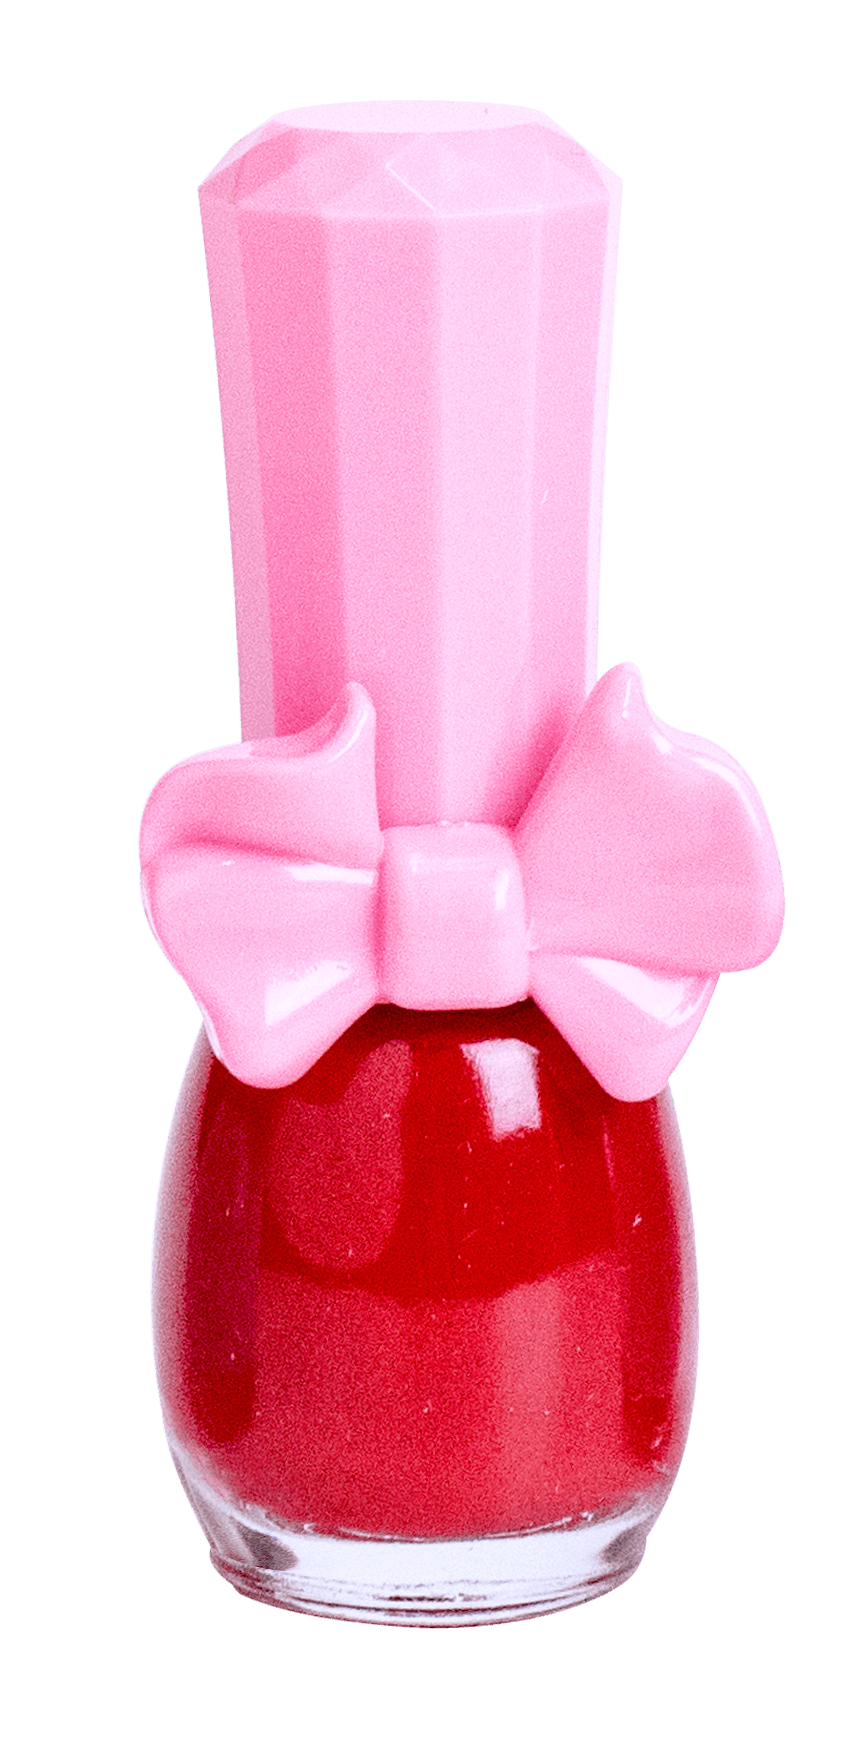 Pinky Cosmetic I'm Pinky Kids Nail Paint Red Apple - Çocuklar İçin Soyulabilir Oje